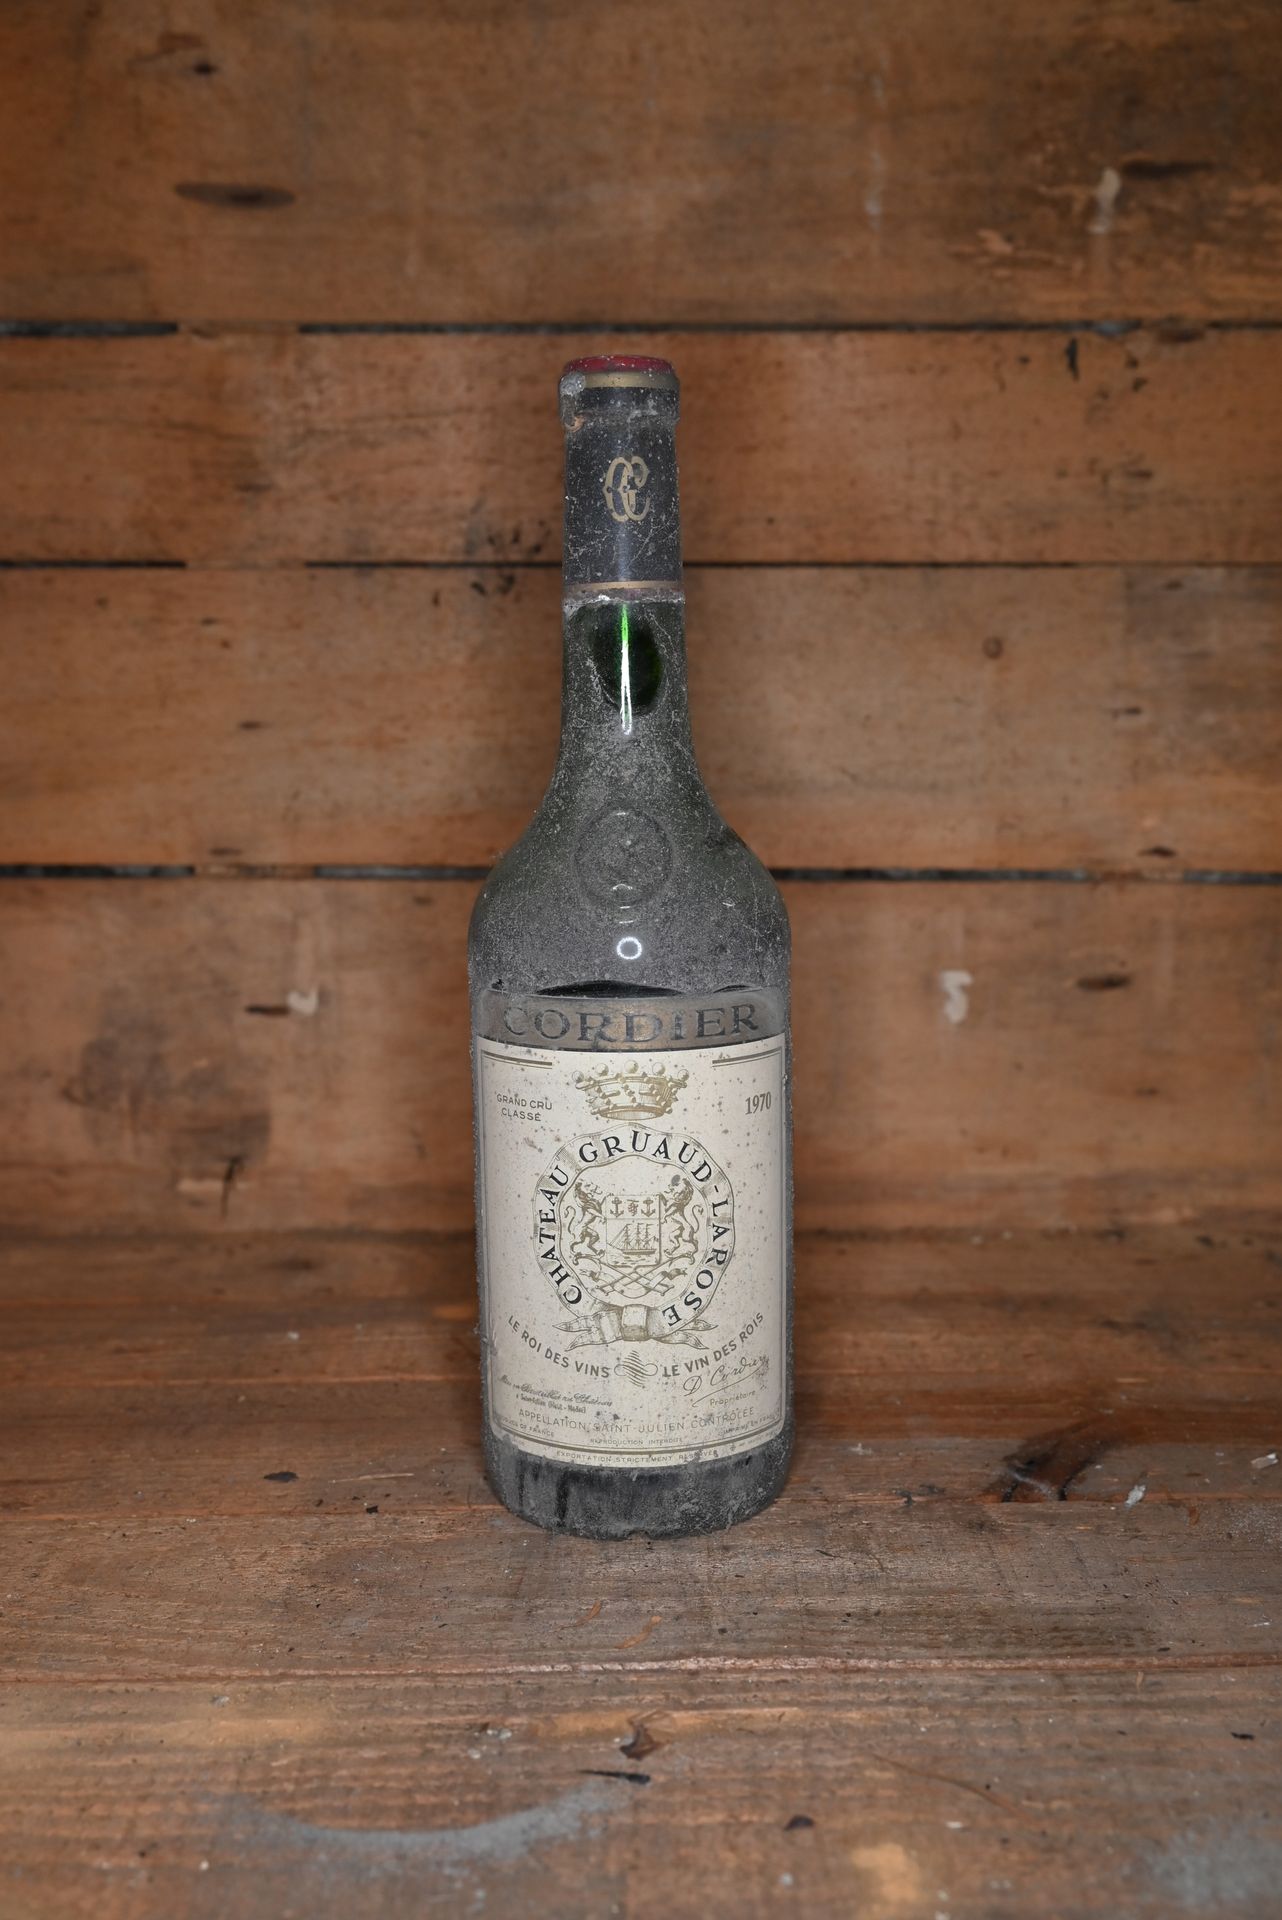 Null 11 bottiglie di Château Gruaud-Larose Saint Julien 1970. Cordier.

Le condi&hellip;